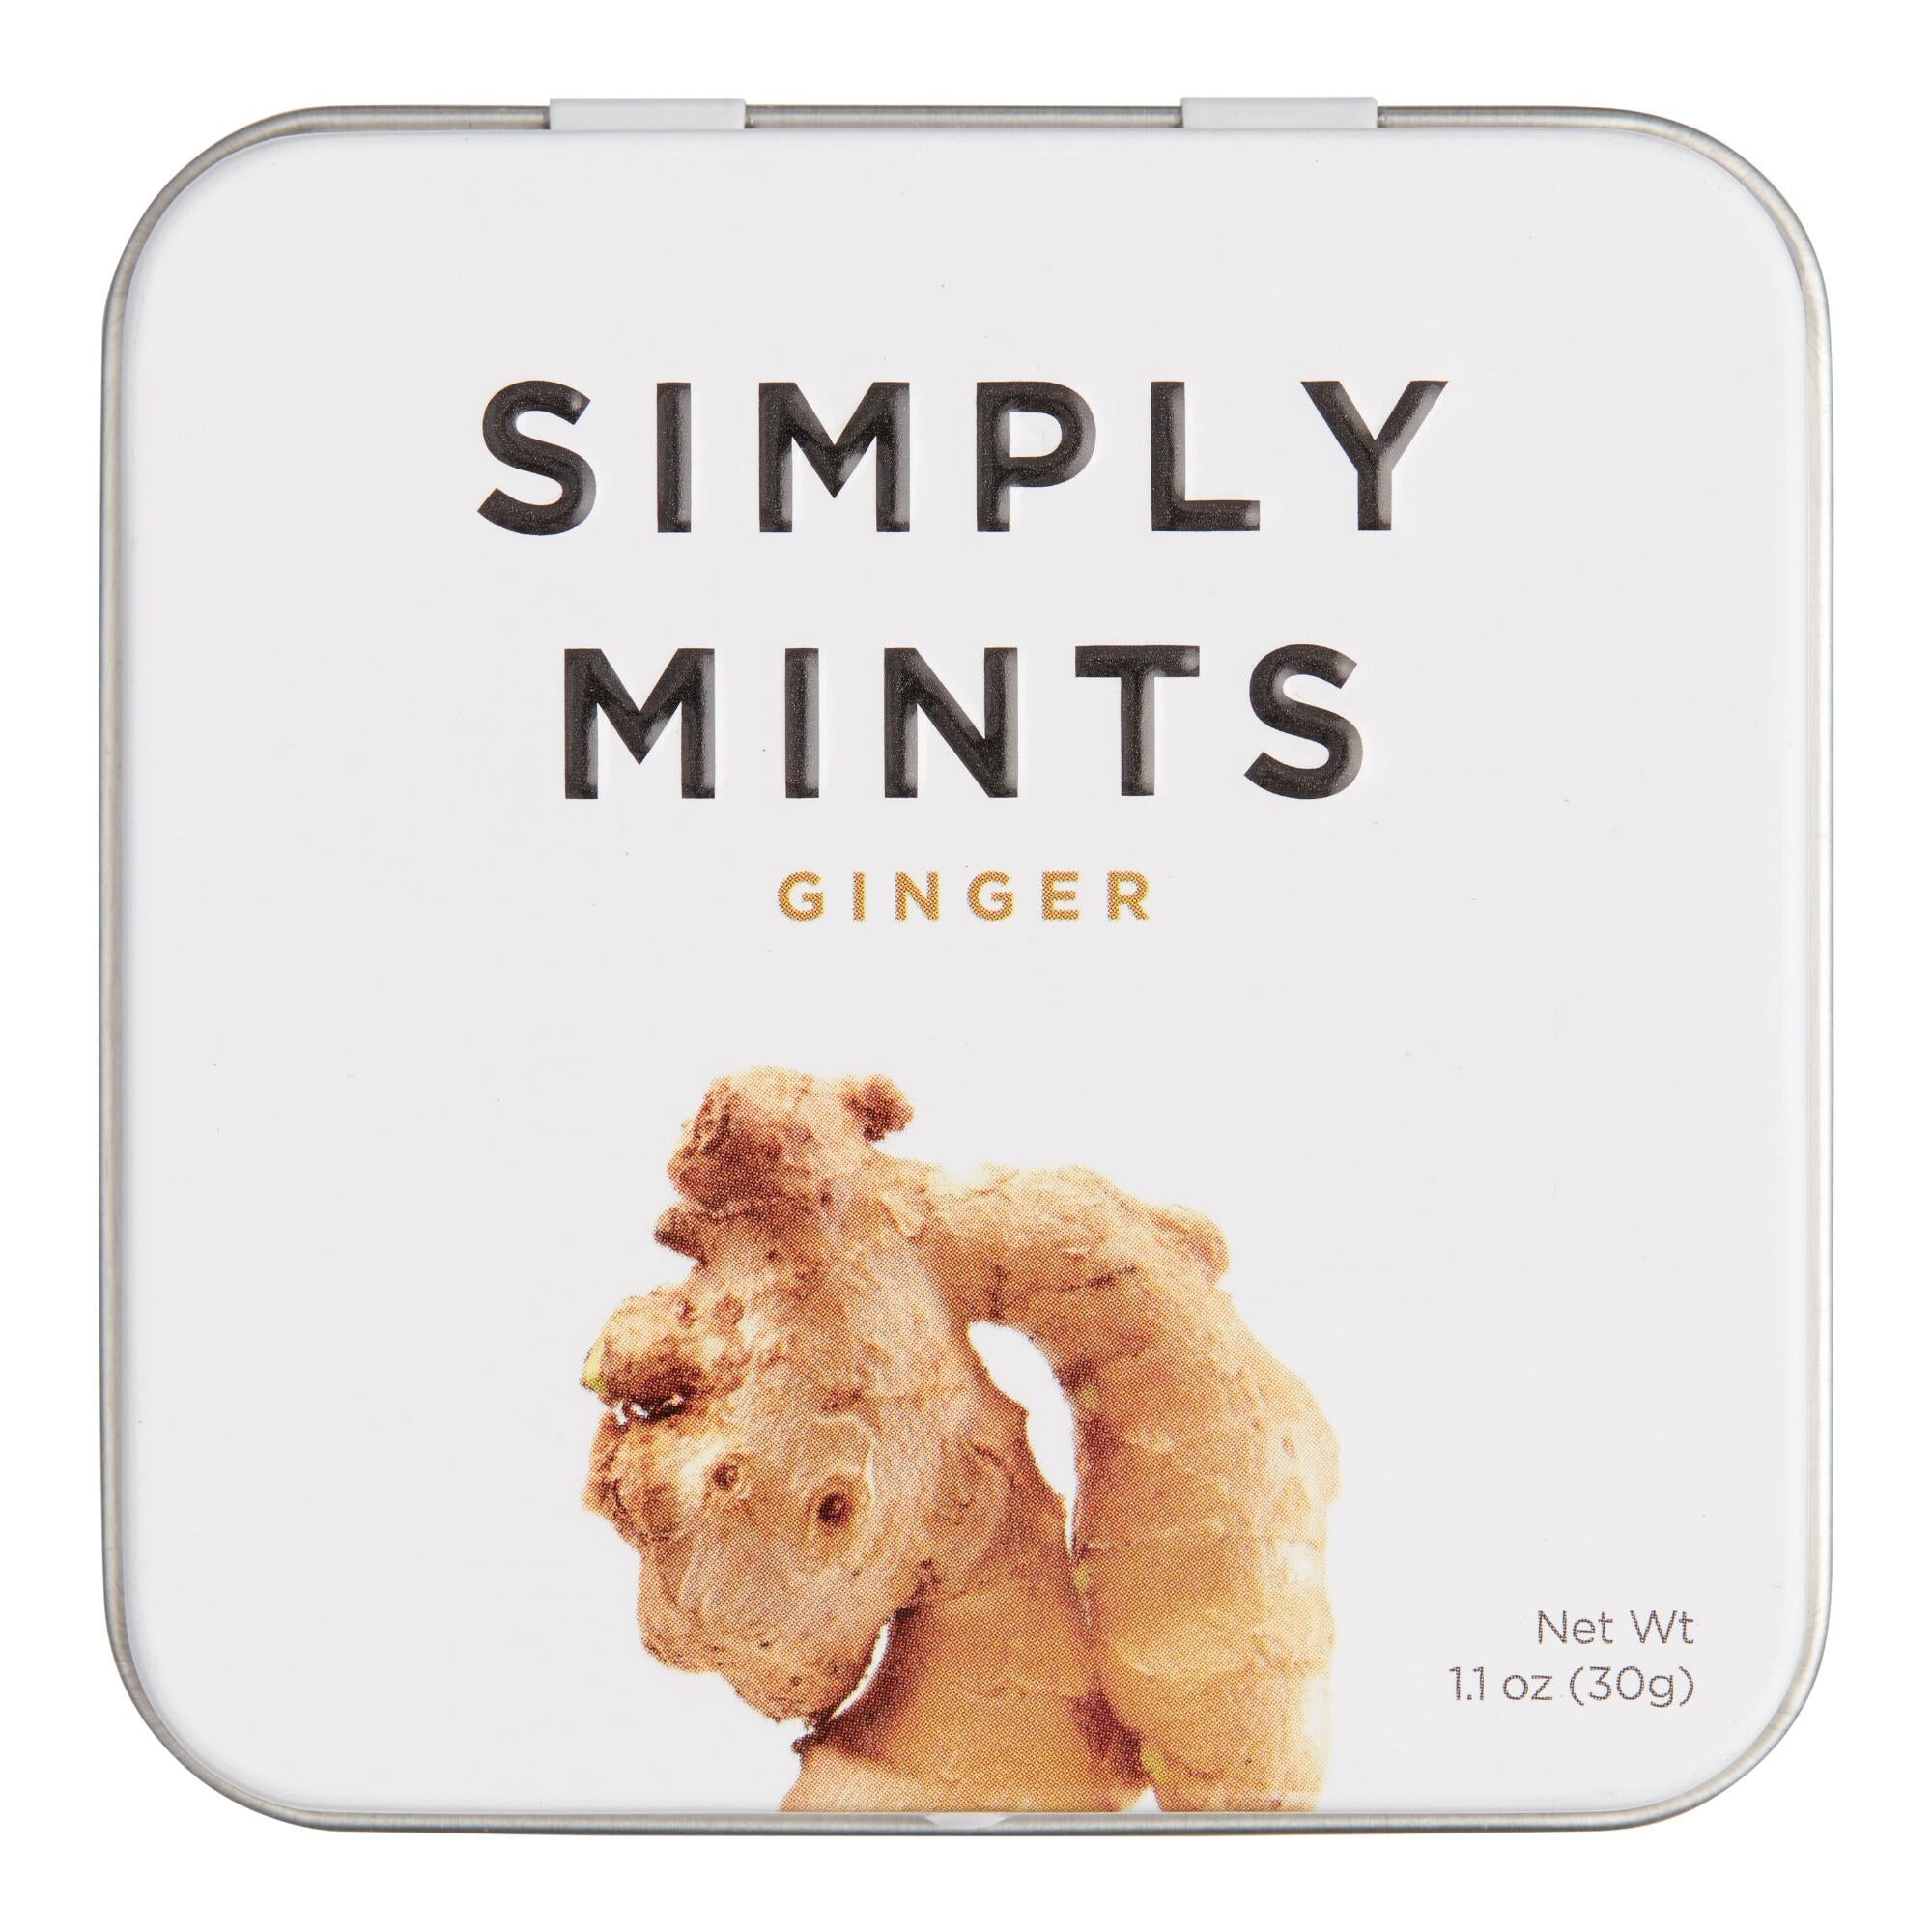 Simply Mints ginger mints